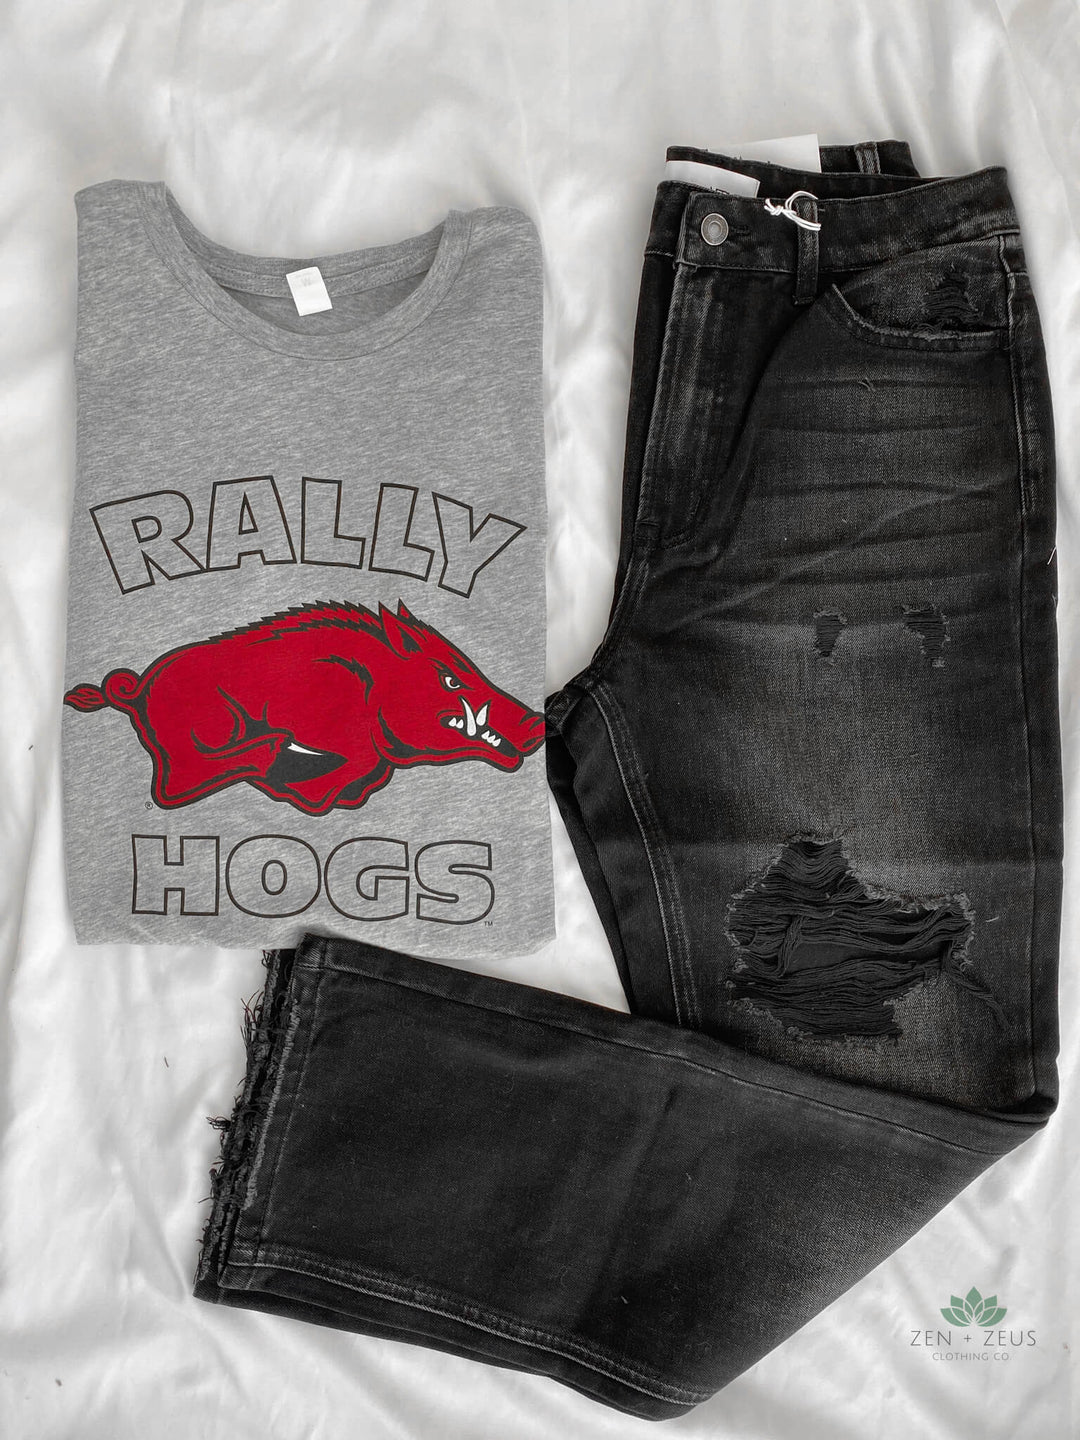 Arkansas Razorbacks Rally Hogs Graphic Tee - Shirts & Tops